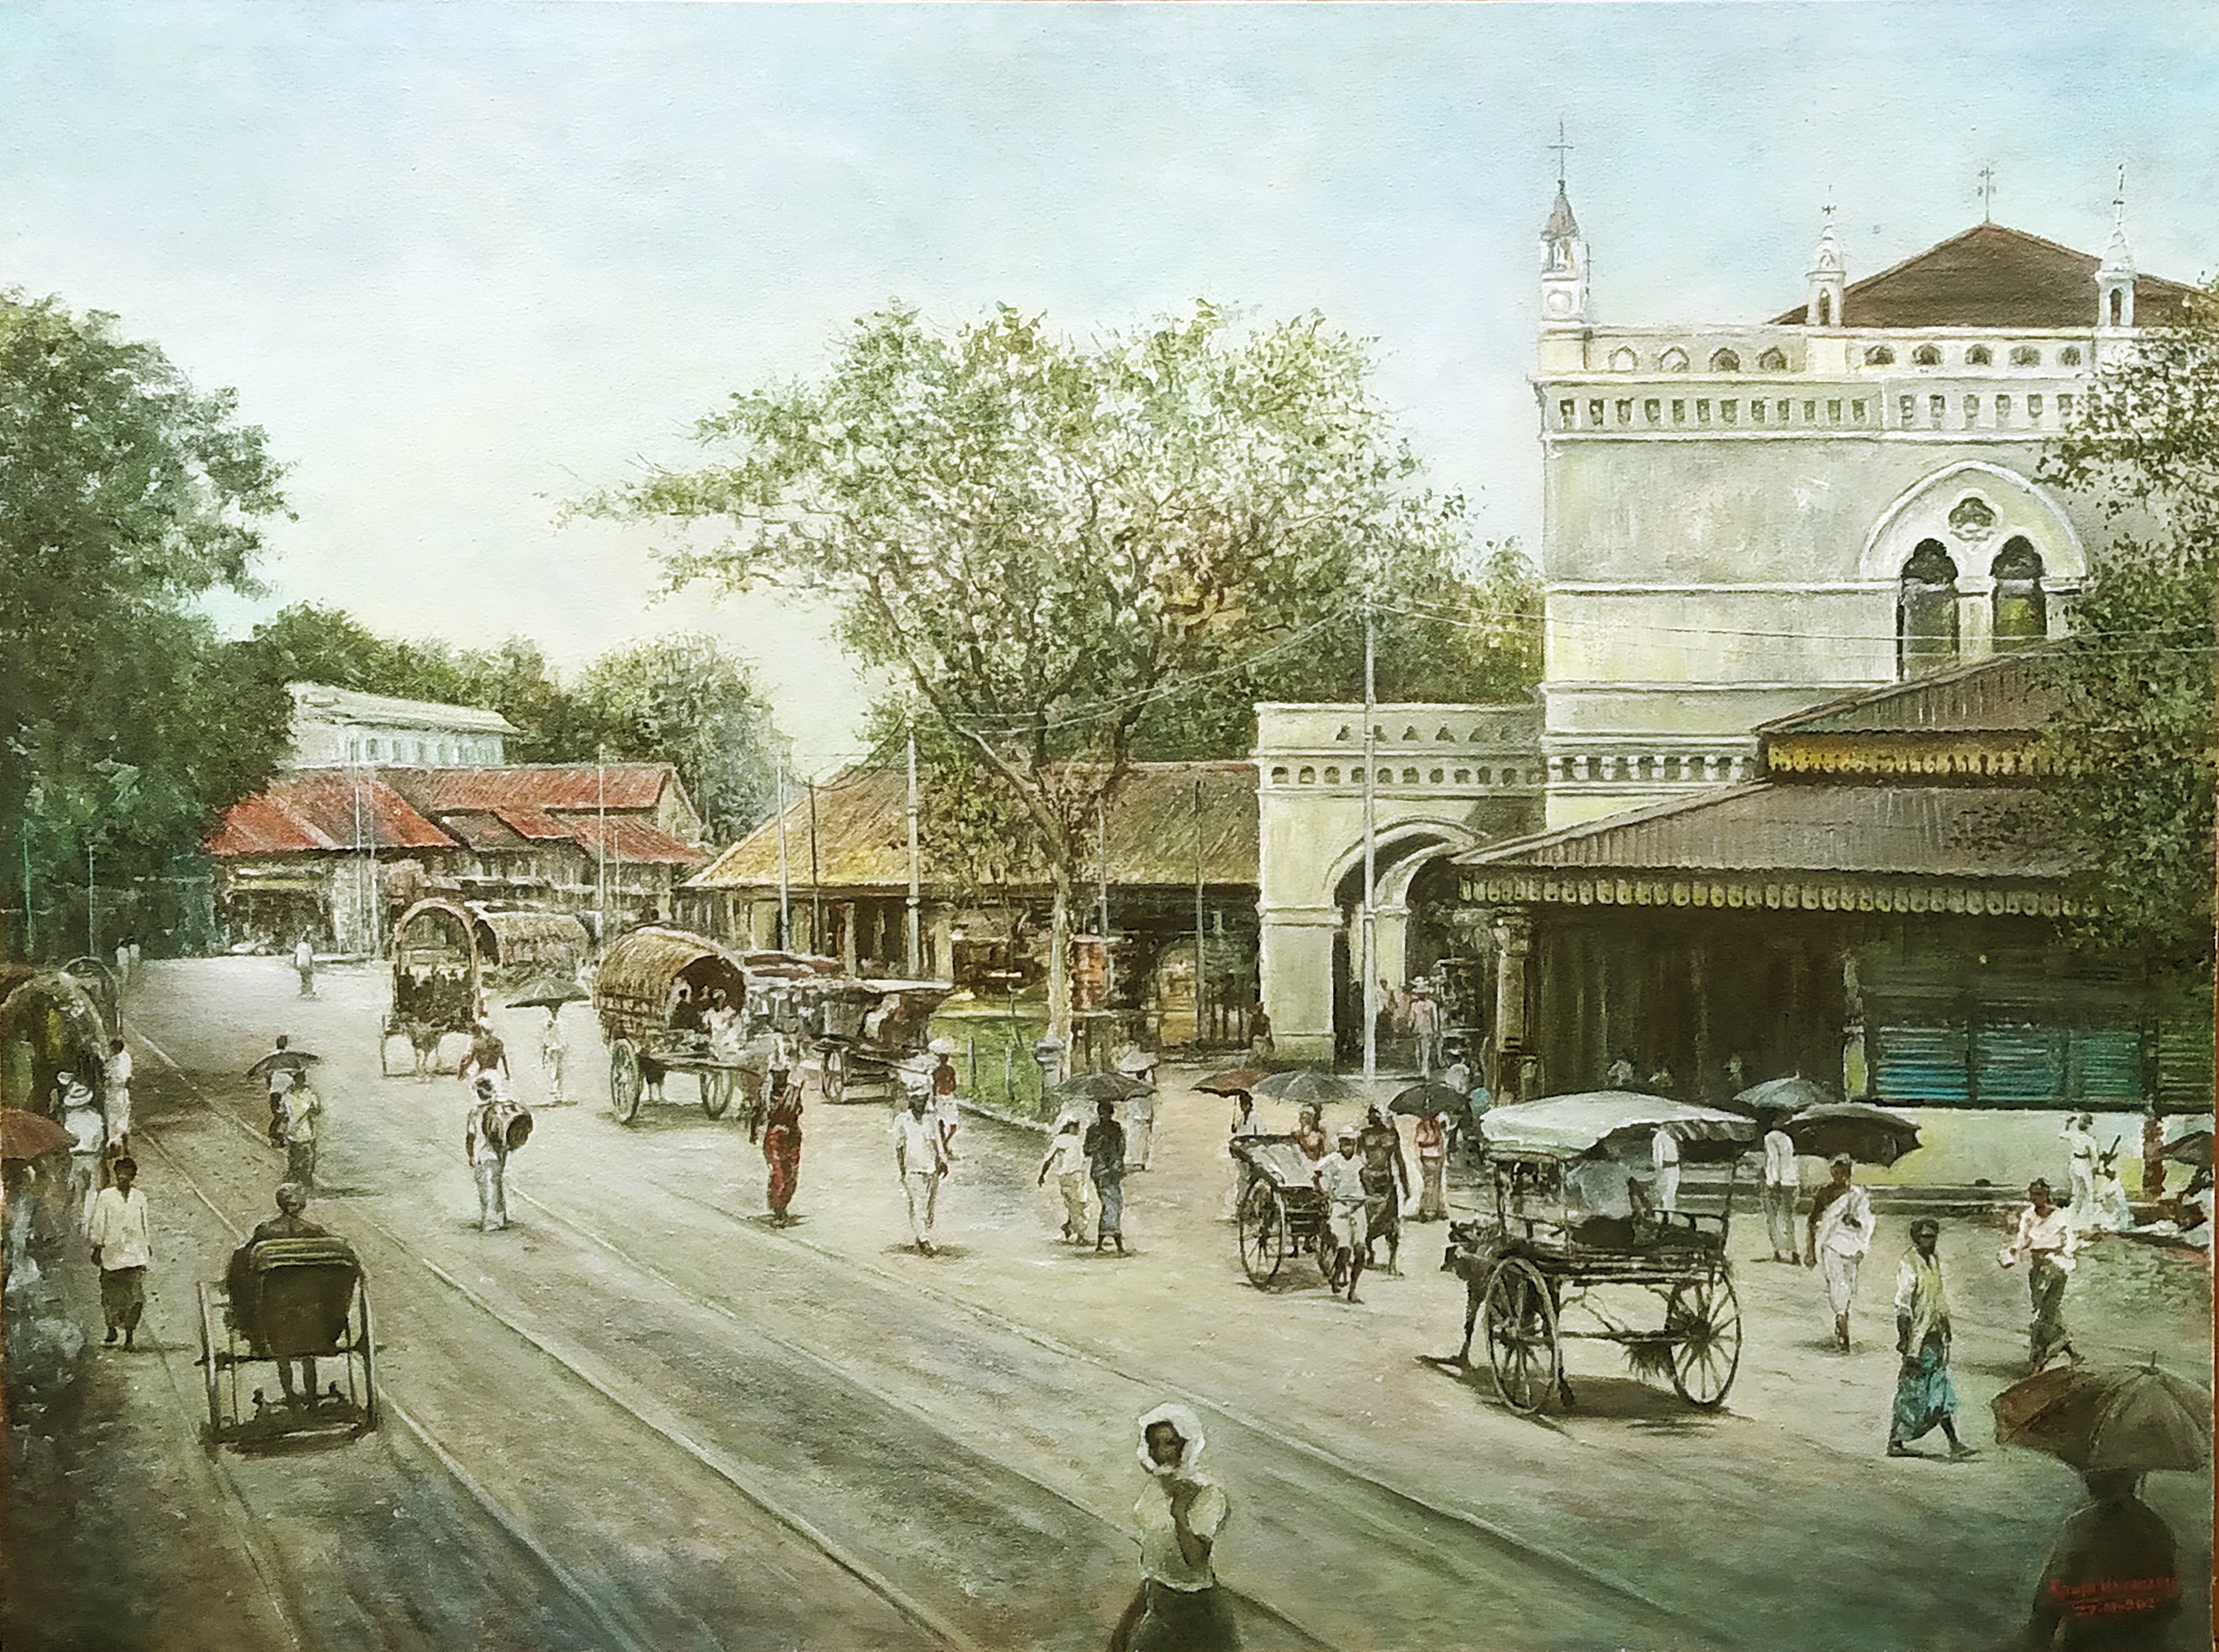 Main street Colombo Ceylon 1900s by RUWAN MAHINDAPALA